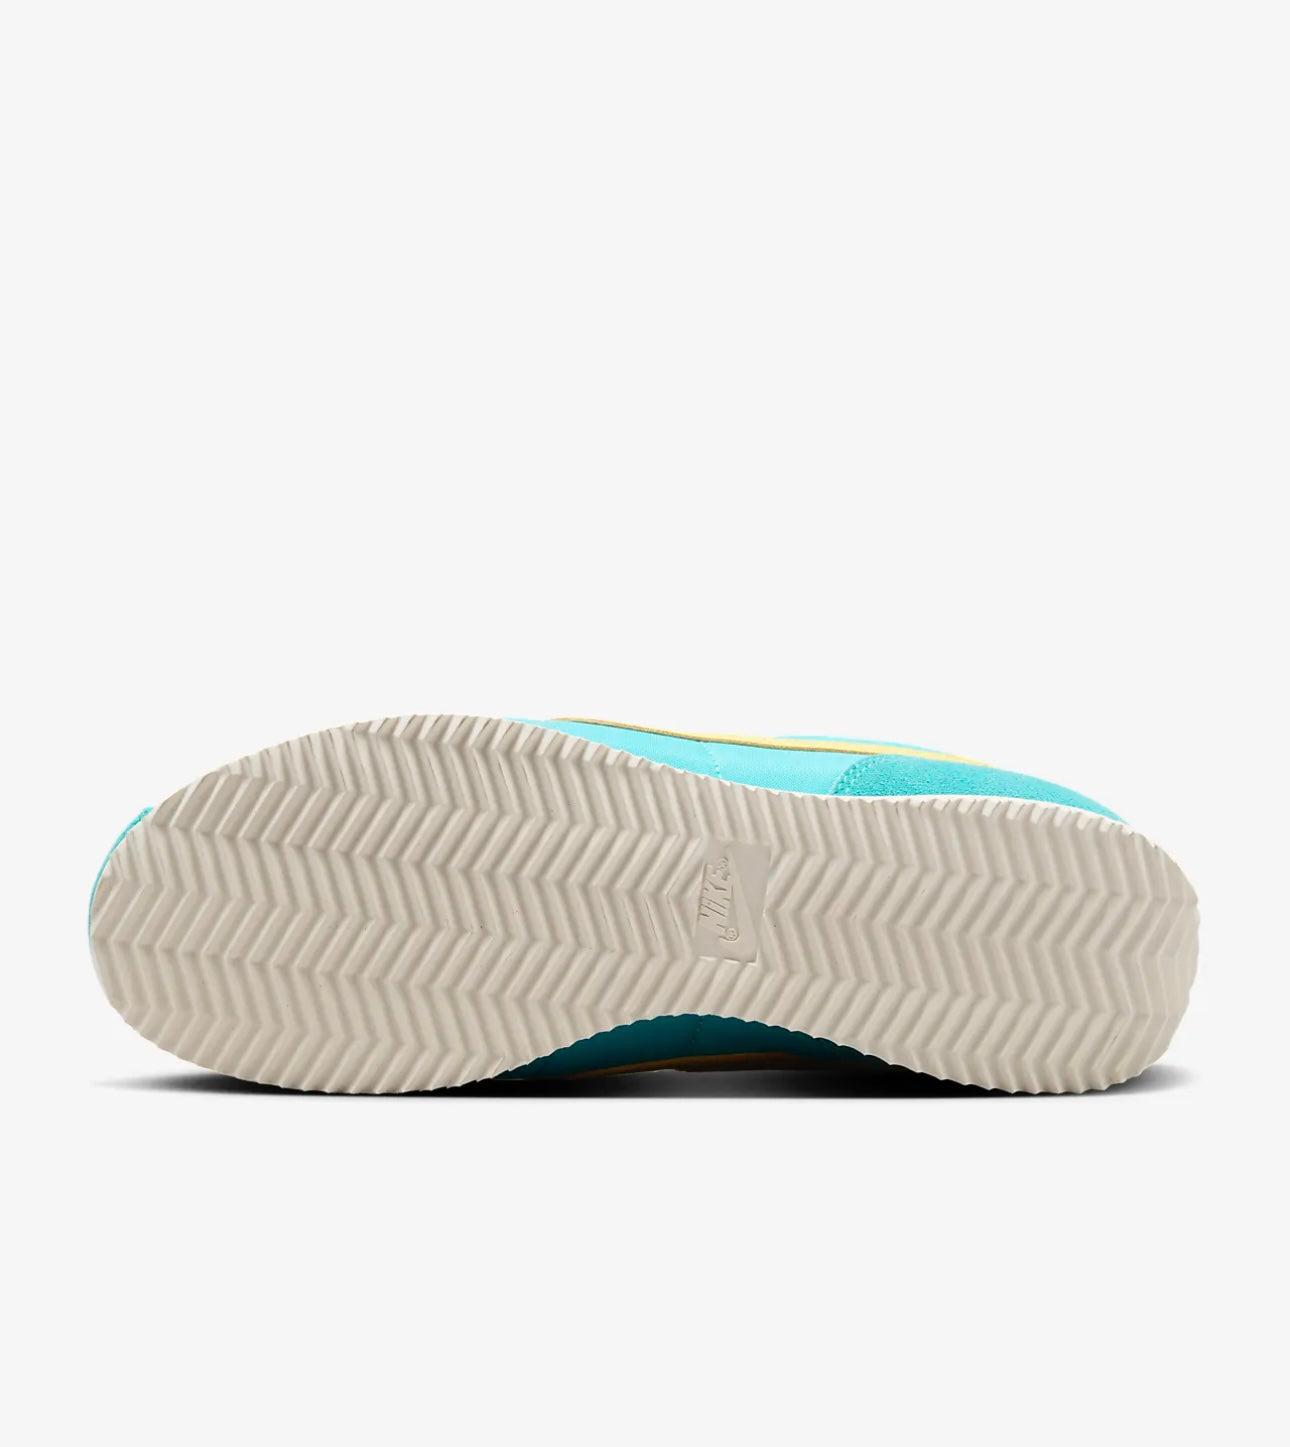 NIKE- Nike Cortez Textile
Shoes